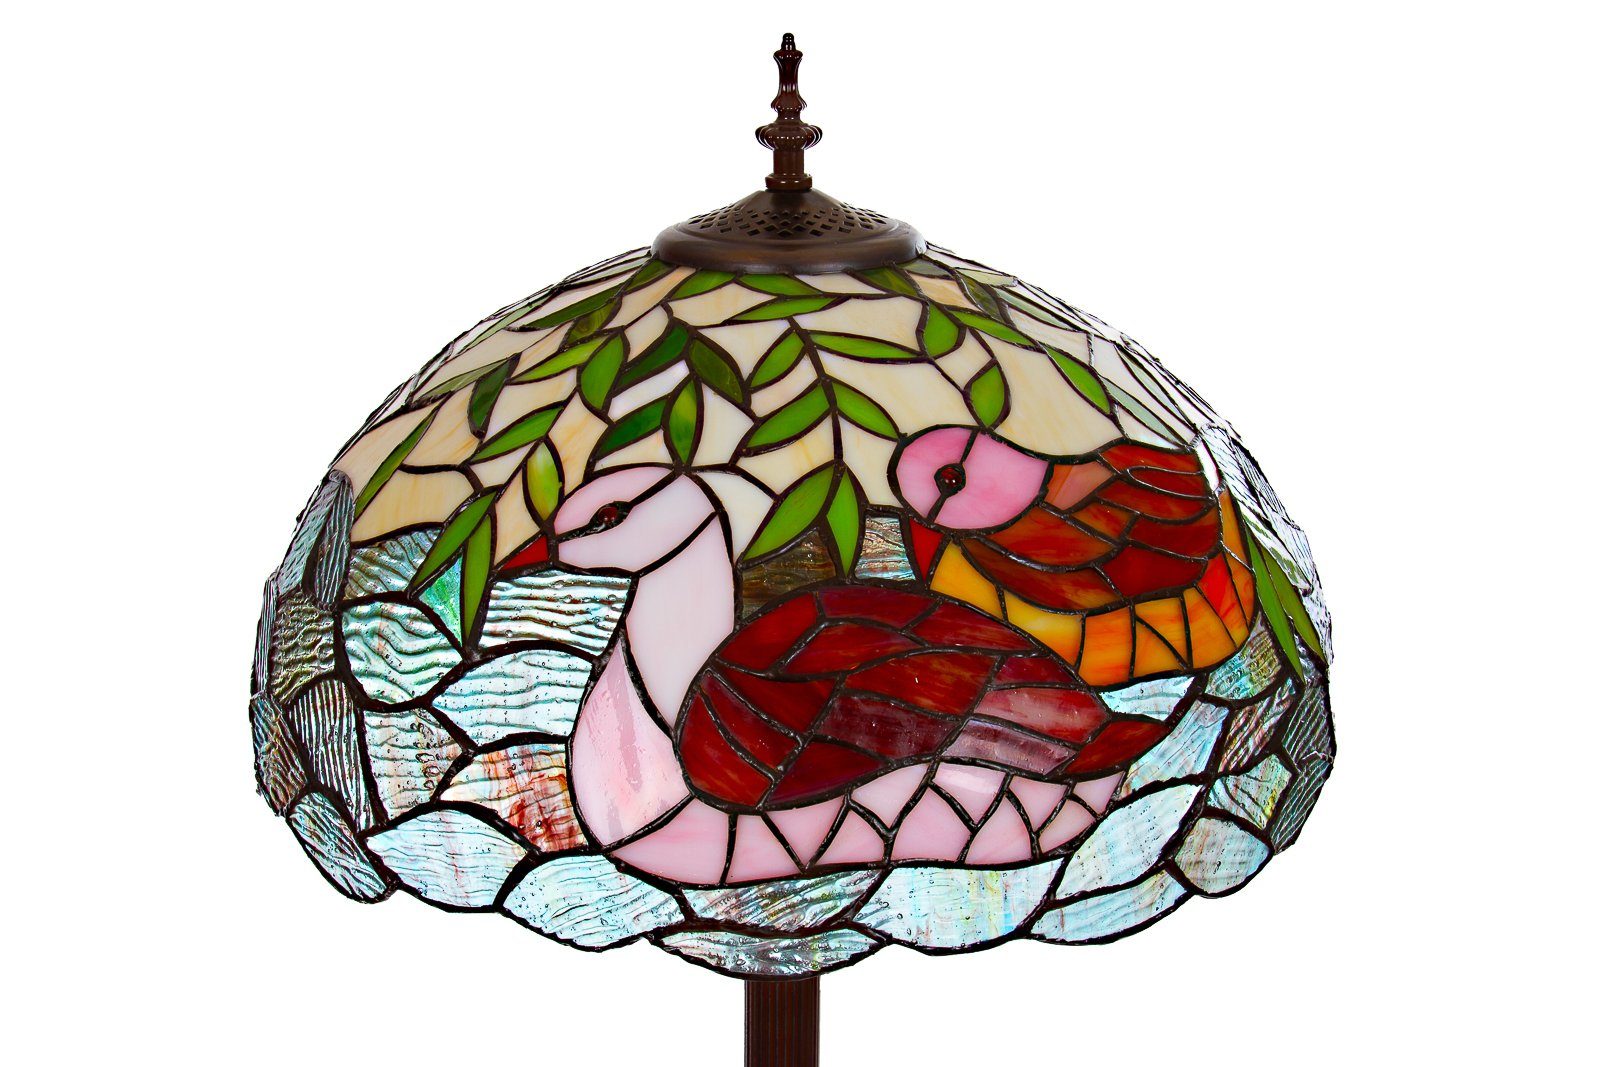 BIRENDY Stehlampe Stehlampe im Tiffany Dekorationslampe, Glaslampe Style, Stehlampe